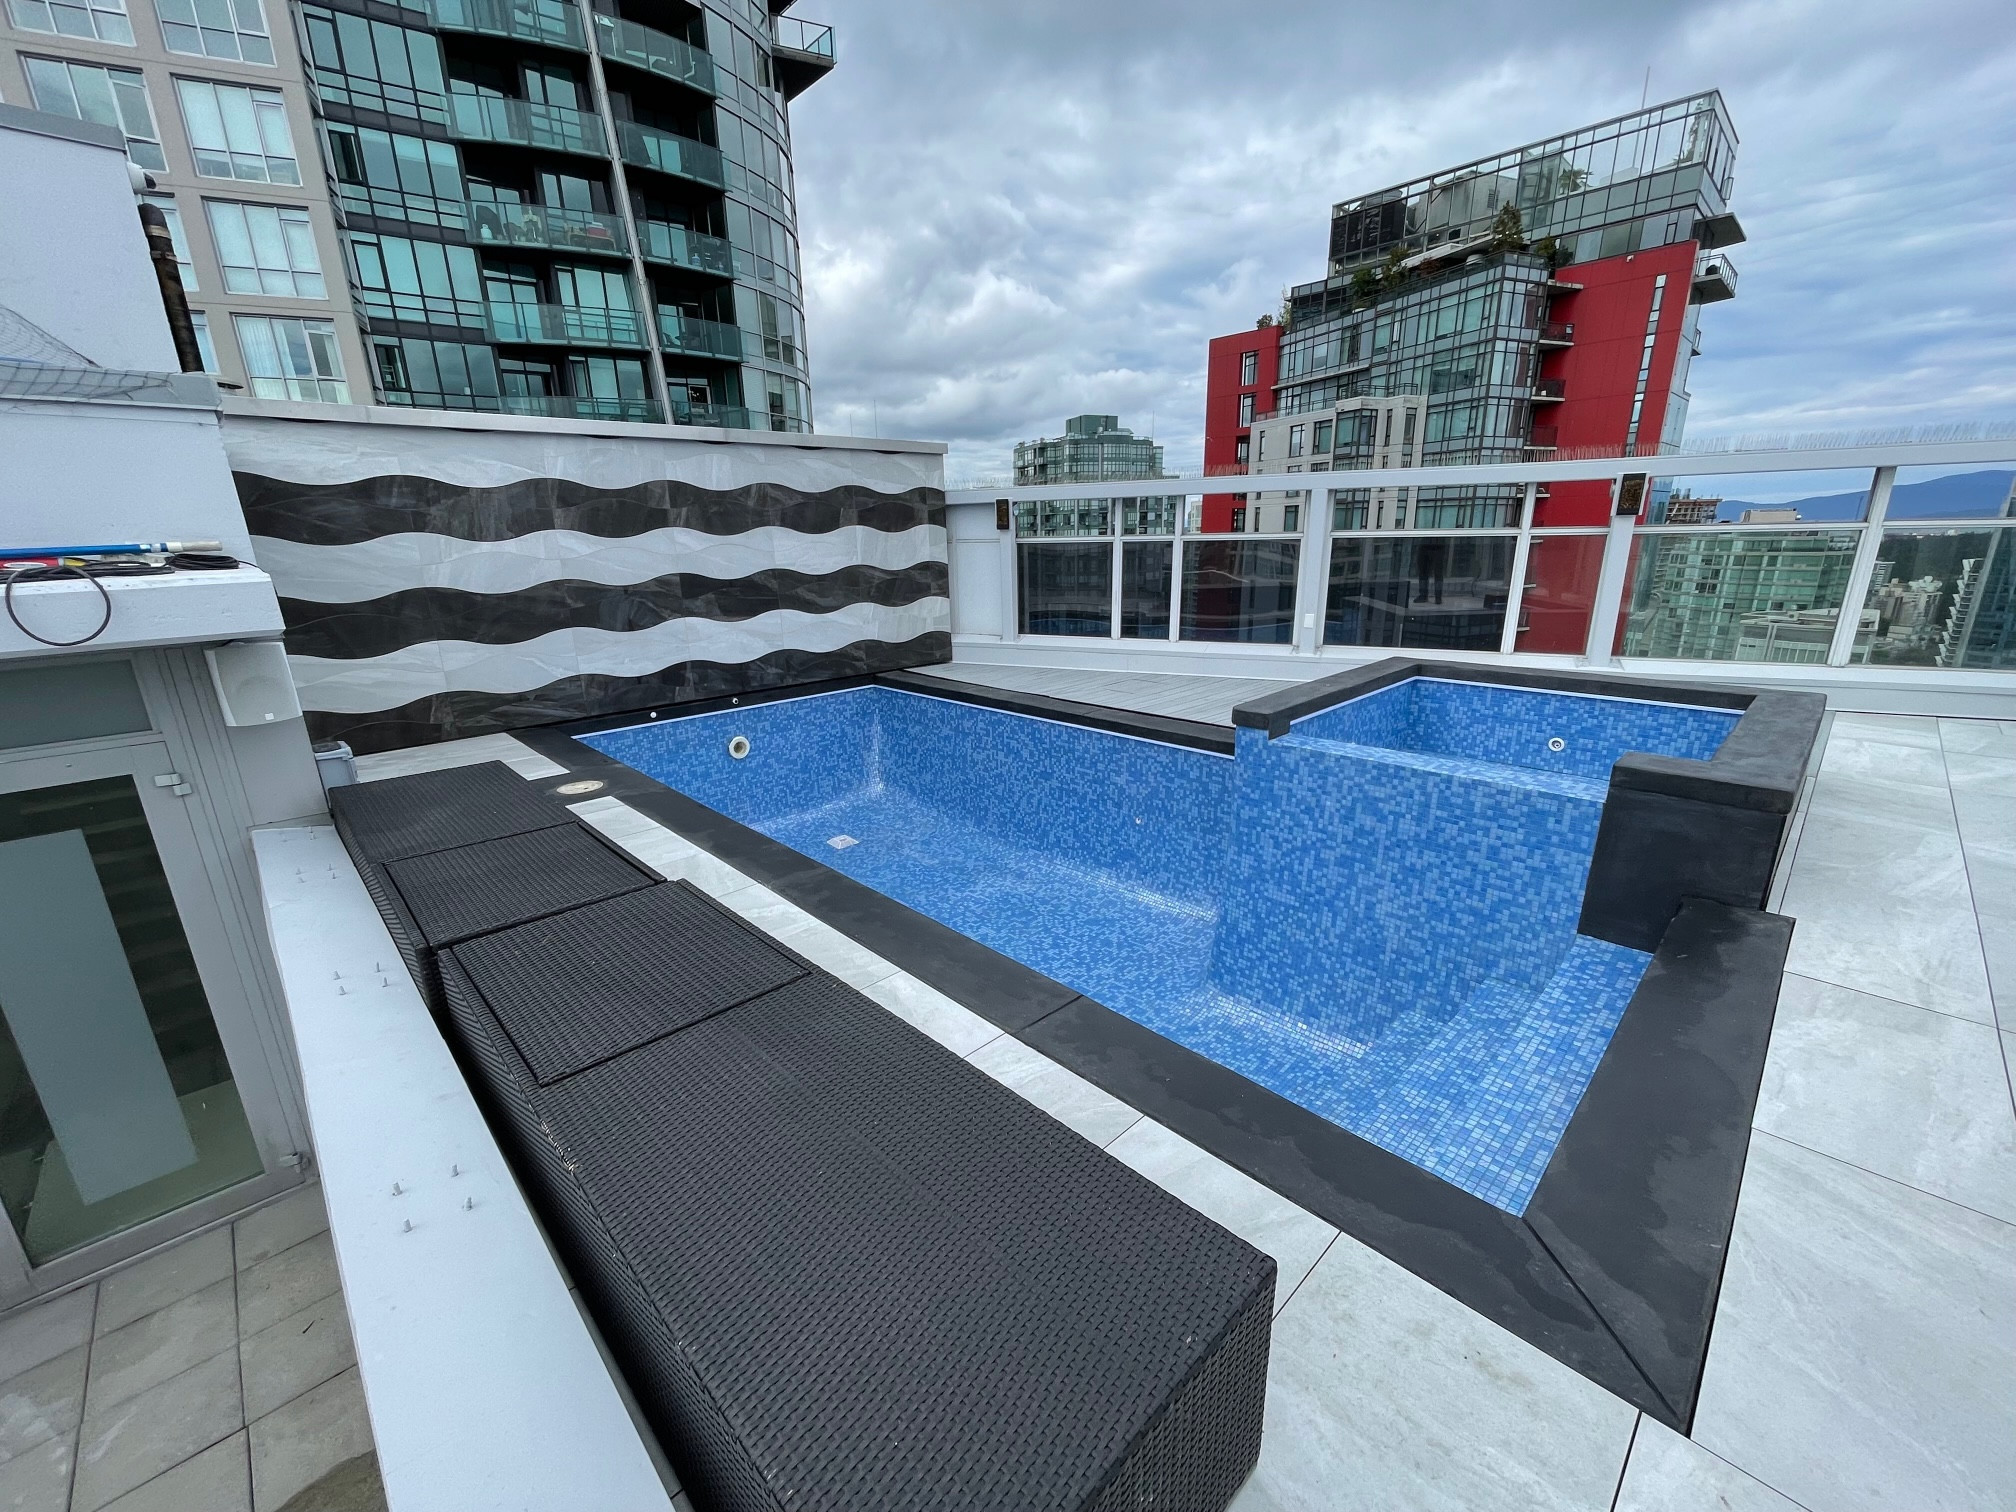 Home design - modern home design idea in Vancouver